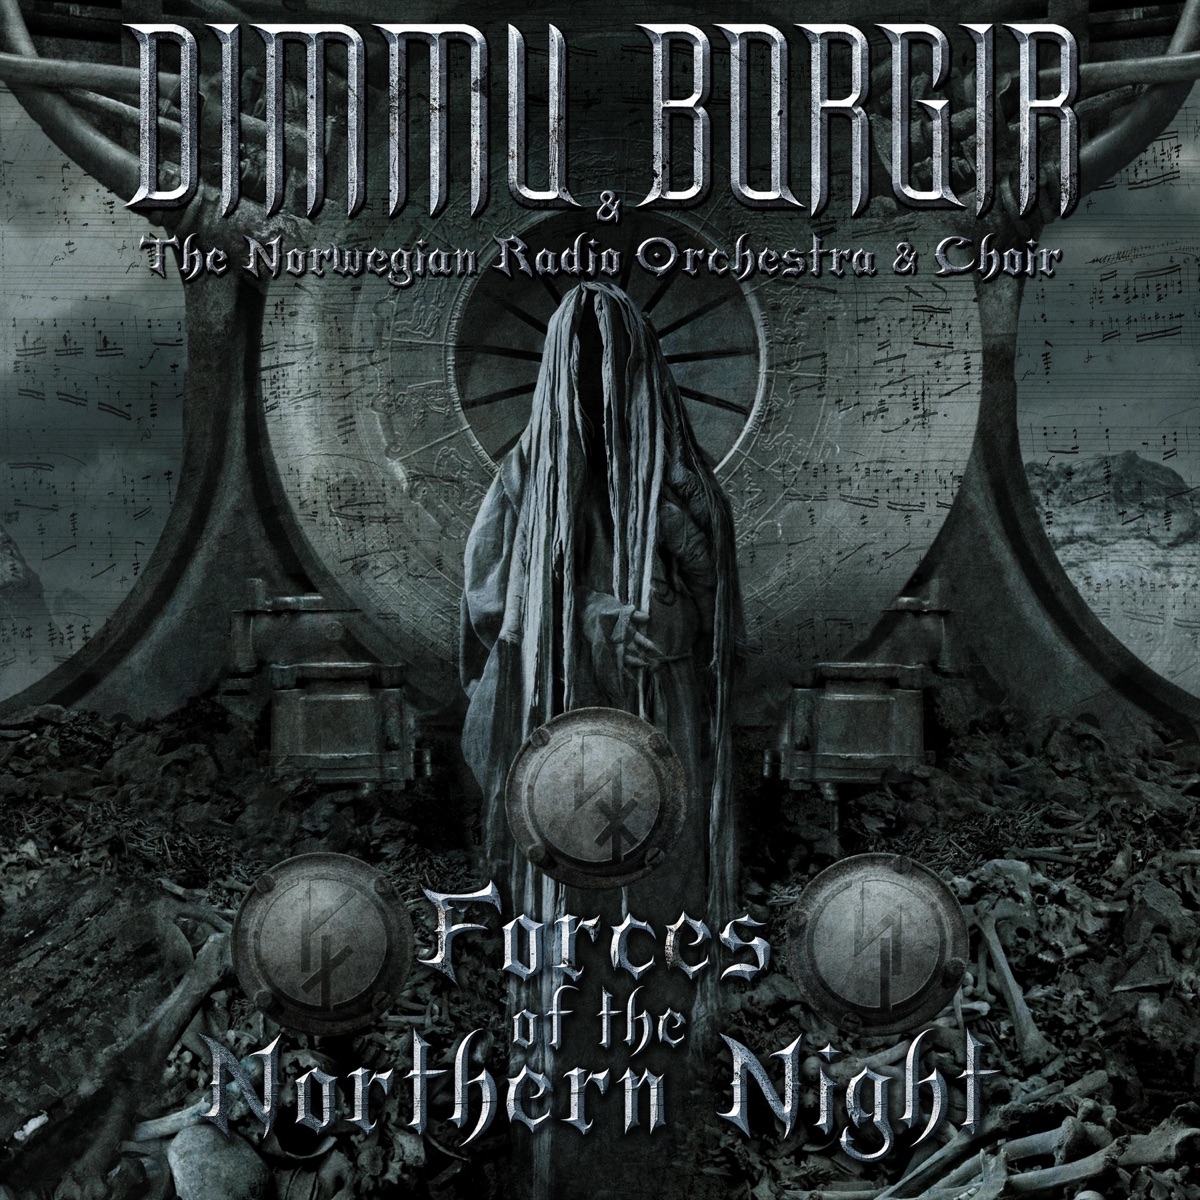 Dimmu Borgir's New Song 'Eonian': Listen to Their First Release in